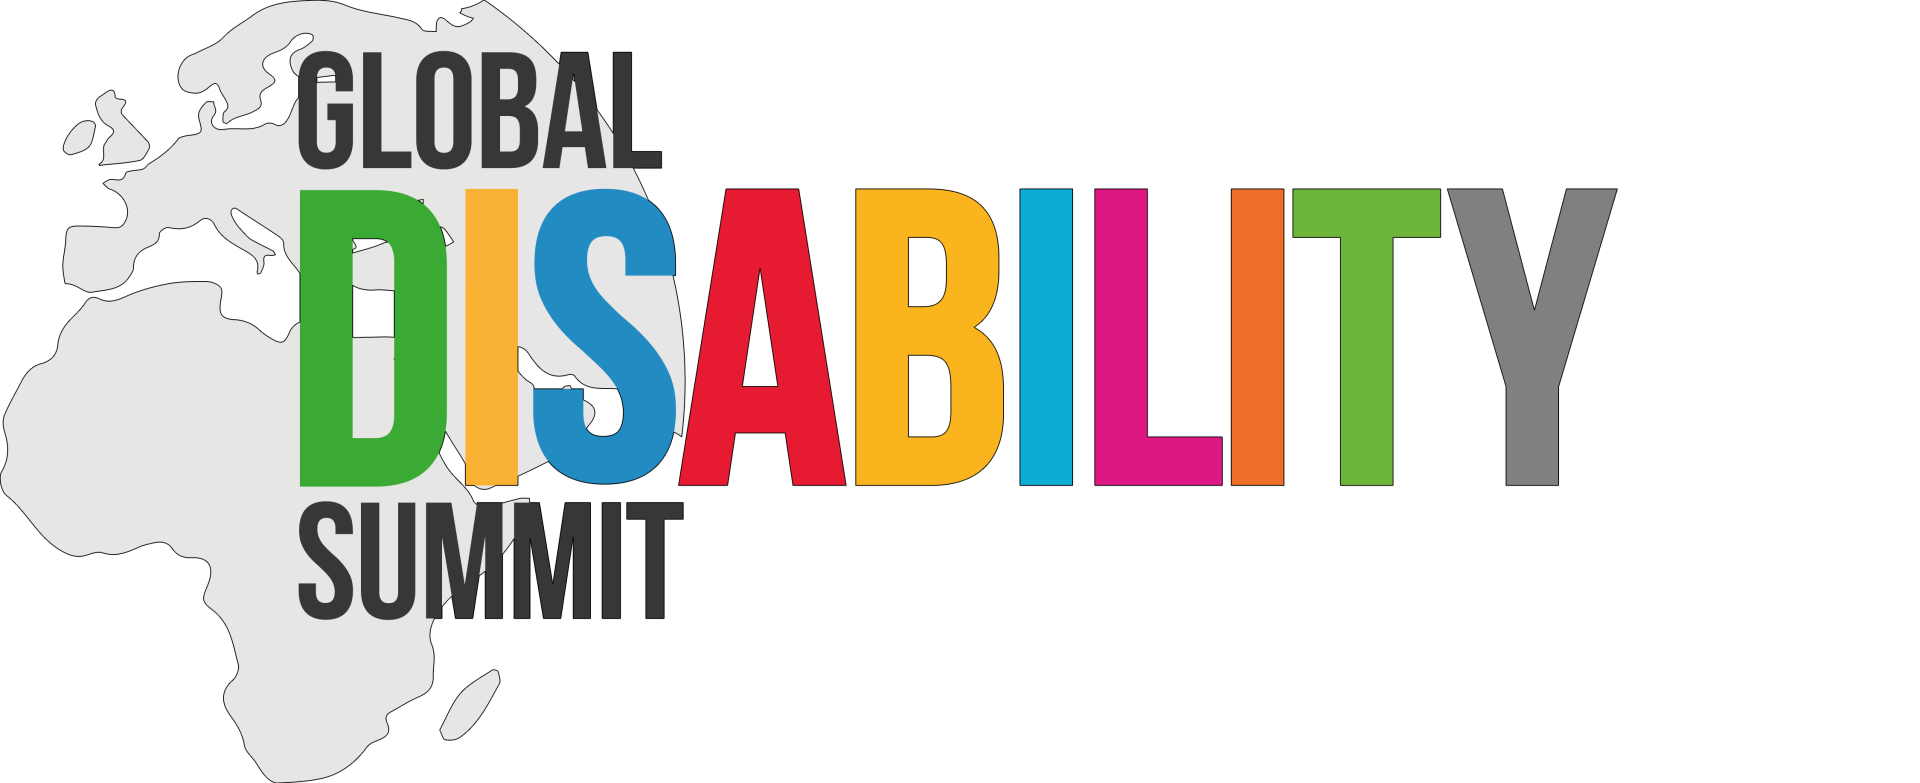 Global Disability Summit | Asia Region